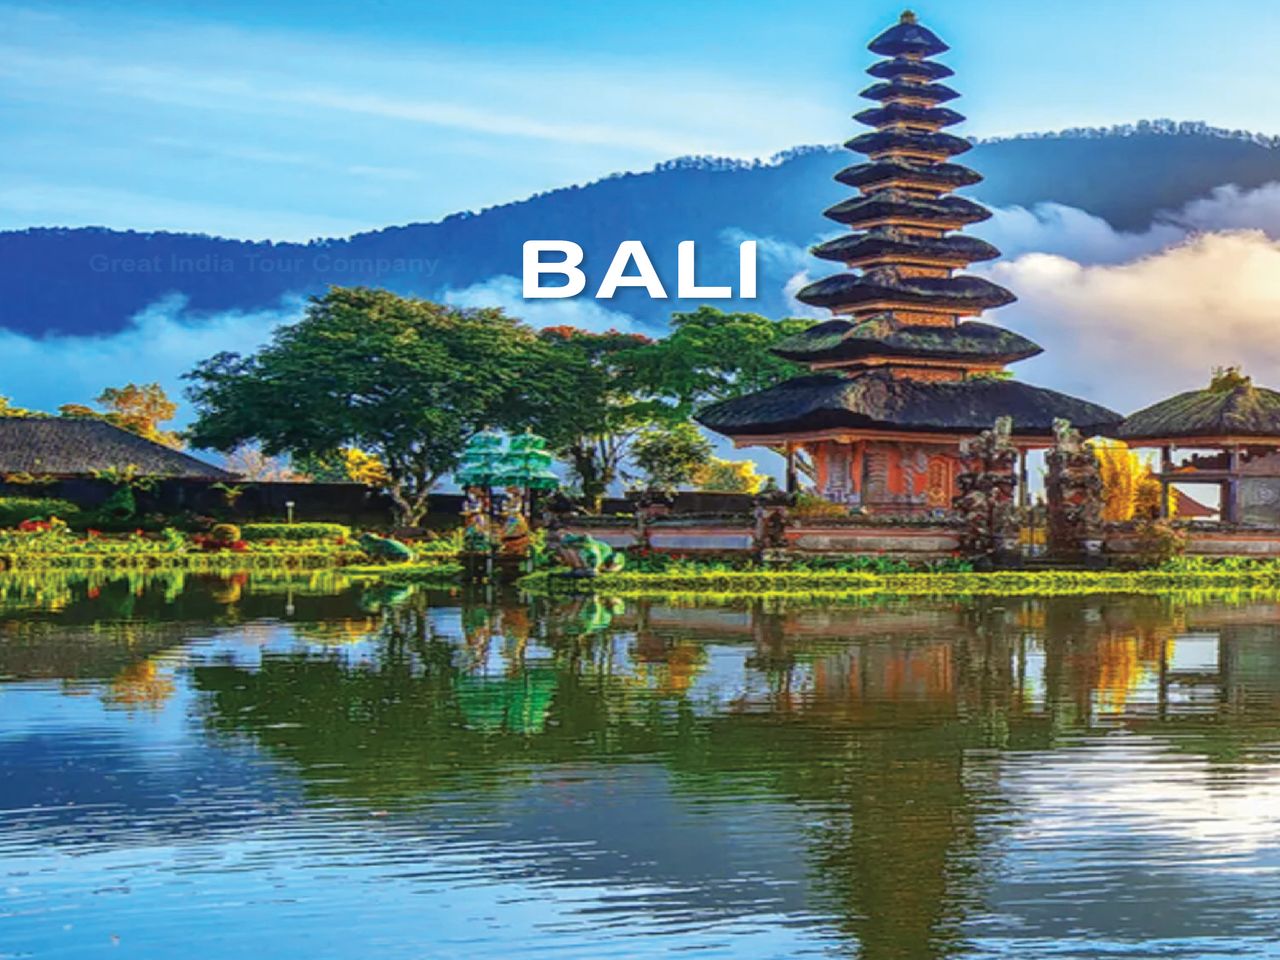  Exotic  Bali  Great India Tour Company